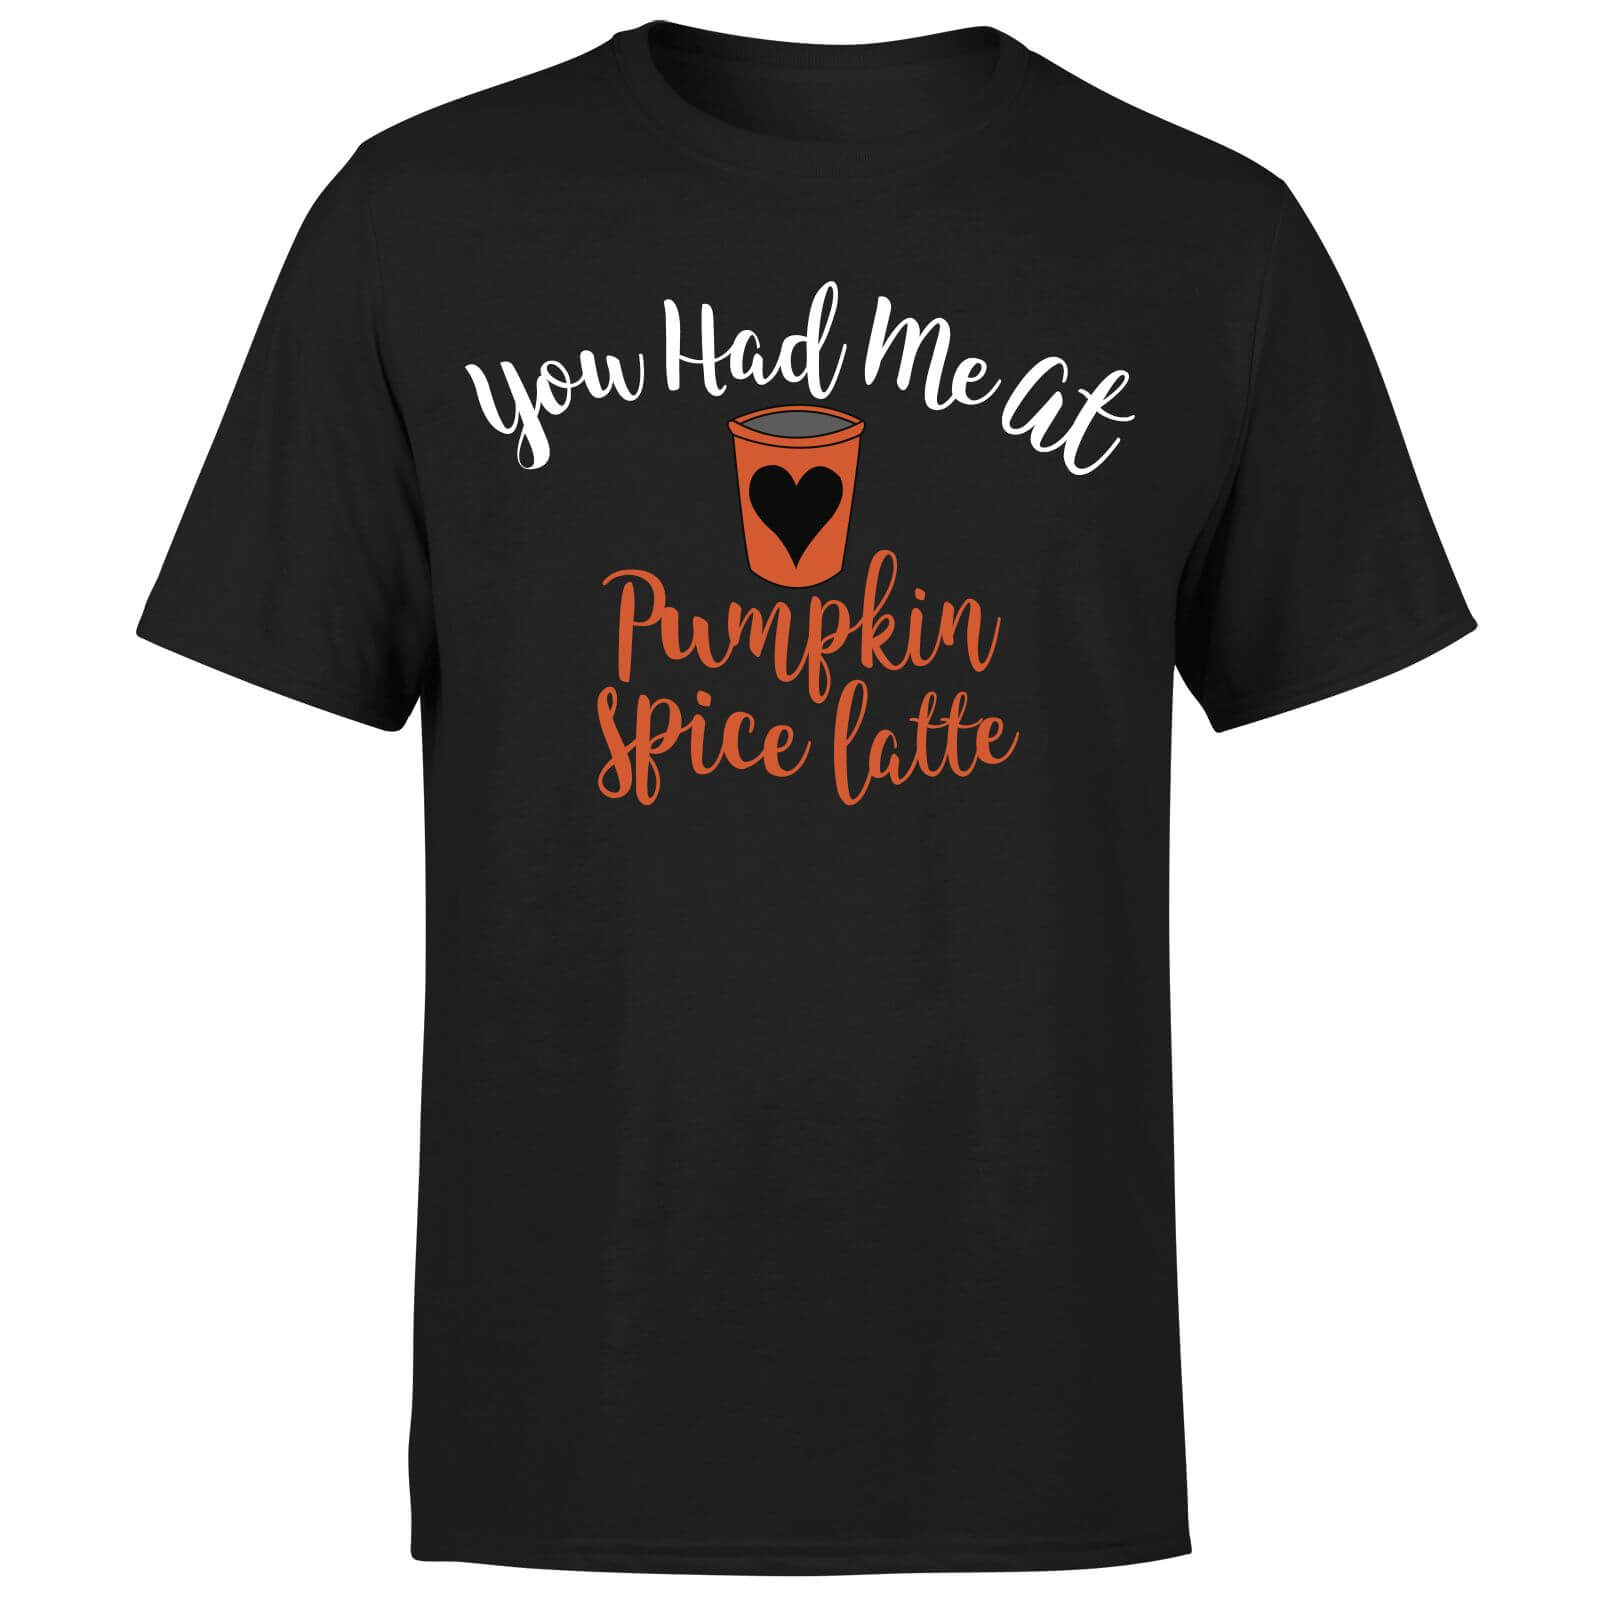 You Had me at Pumpkin Spice Latte T-Shirt - Black - S - Black